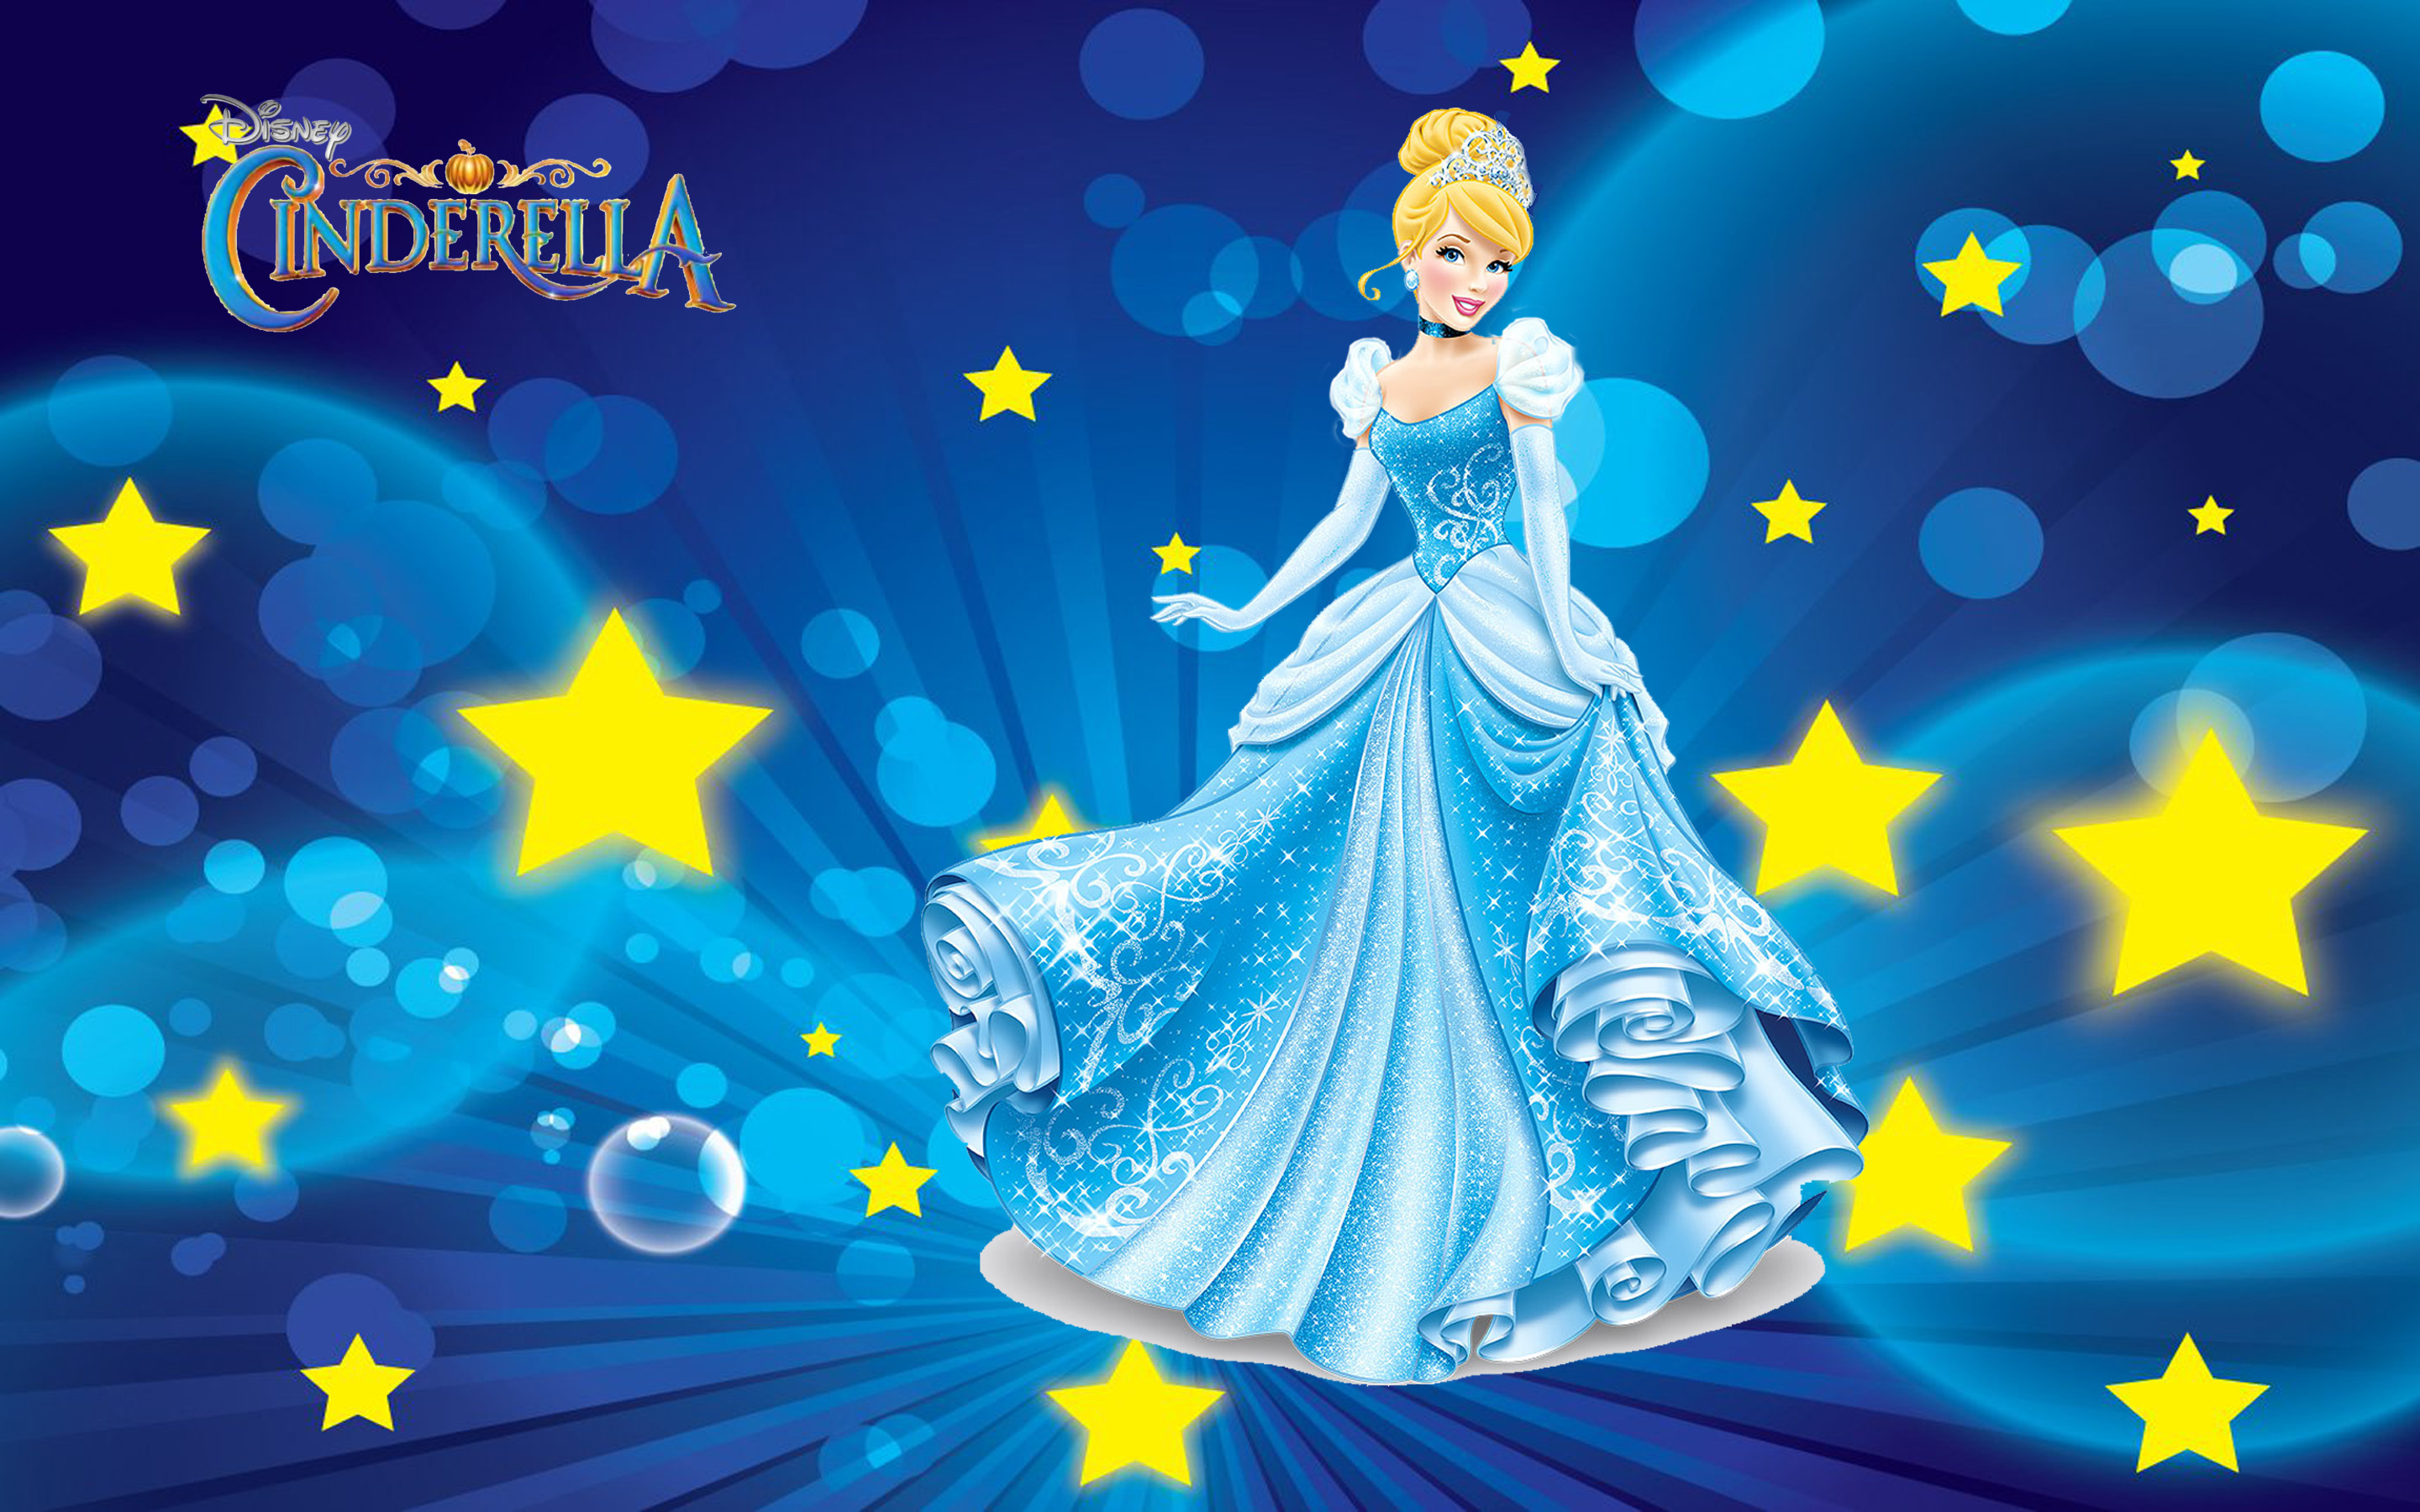 Disney Princess Cinderella Cartoon Desktop Hd Wallpaper For Pc Tablet